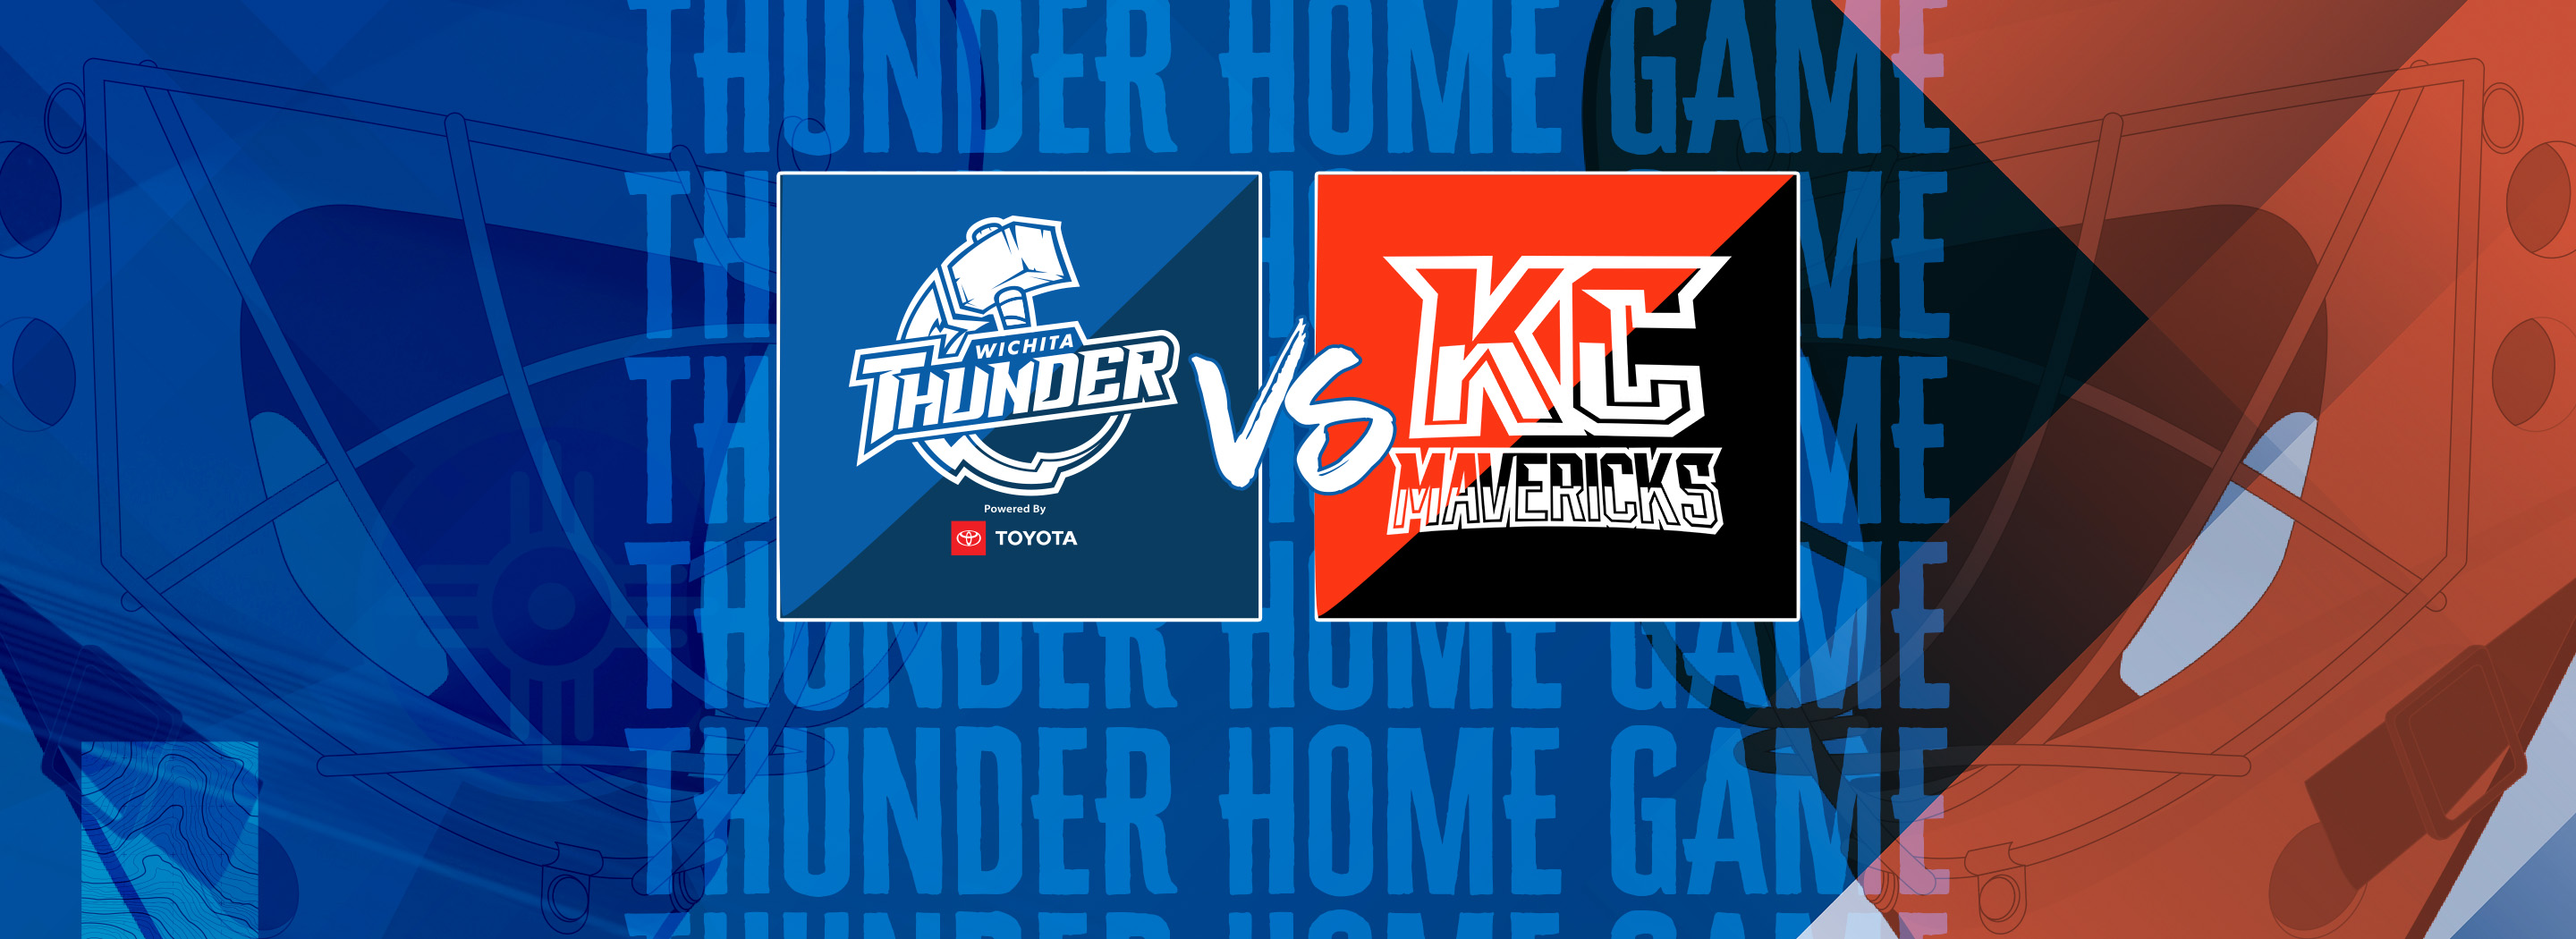 Thunder vs Kansas City at INTRUST Bank Arena - DEC 3